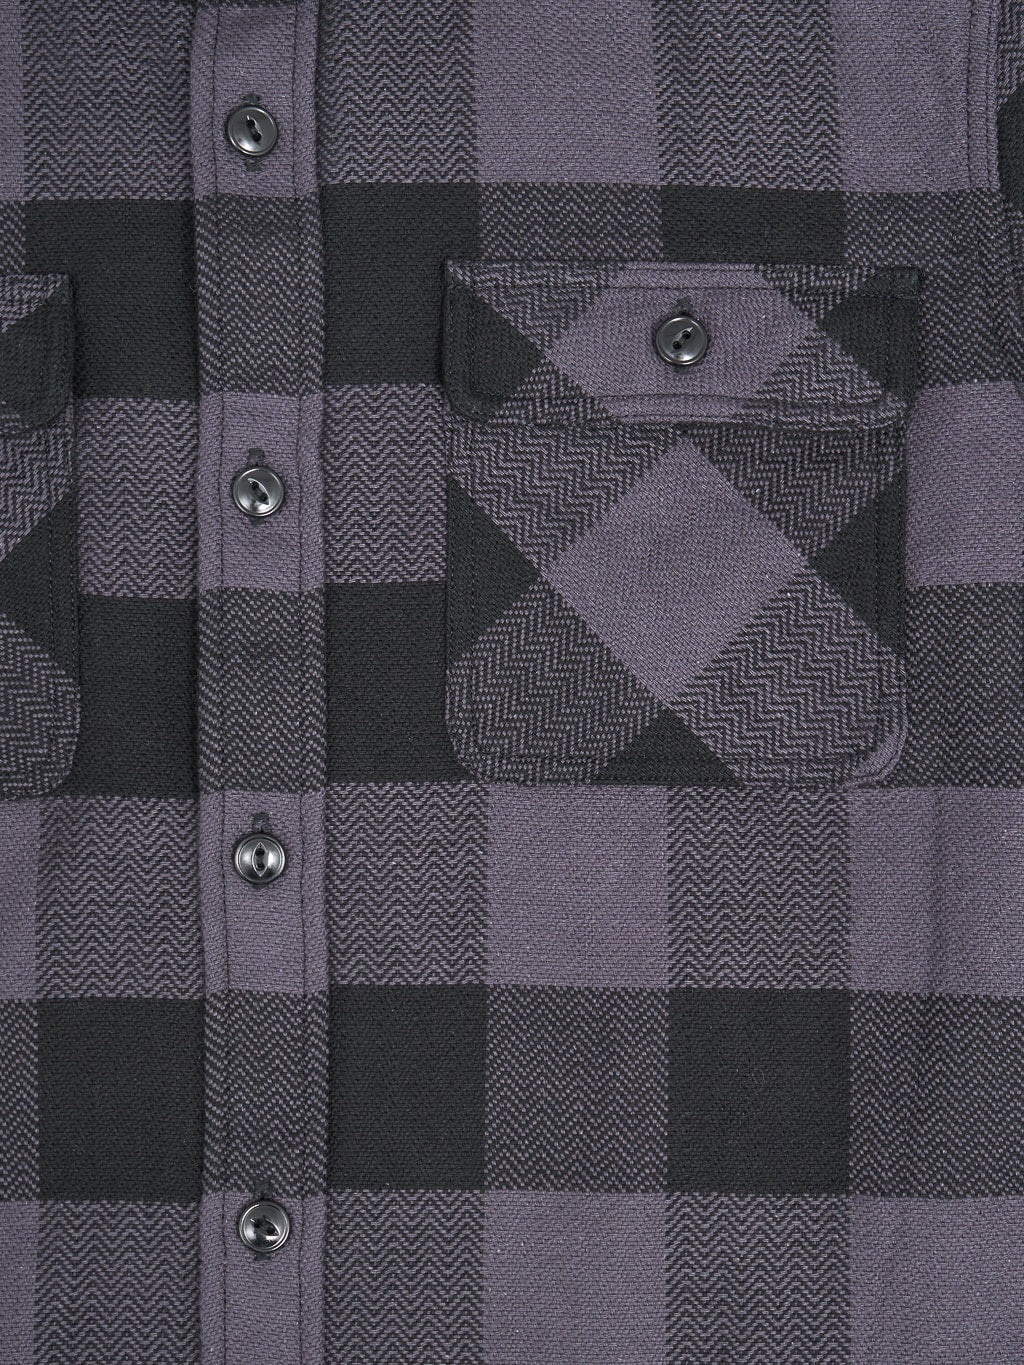 The Flat Head Block Check Flannel Shirt Grey chest pocket fabric